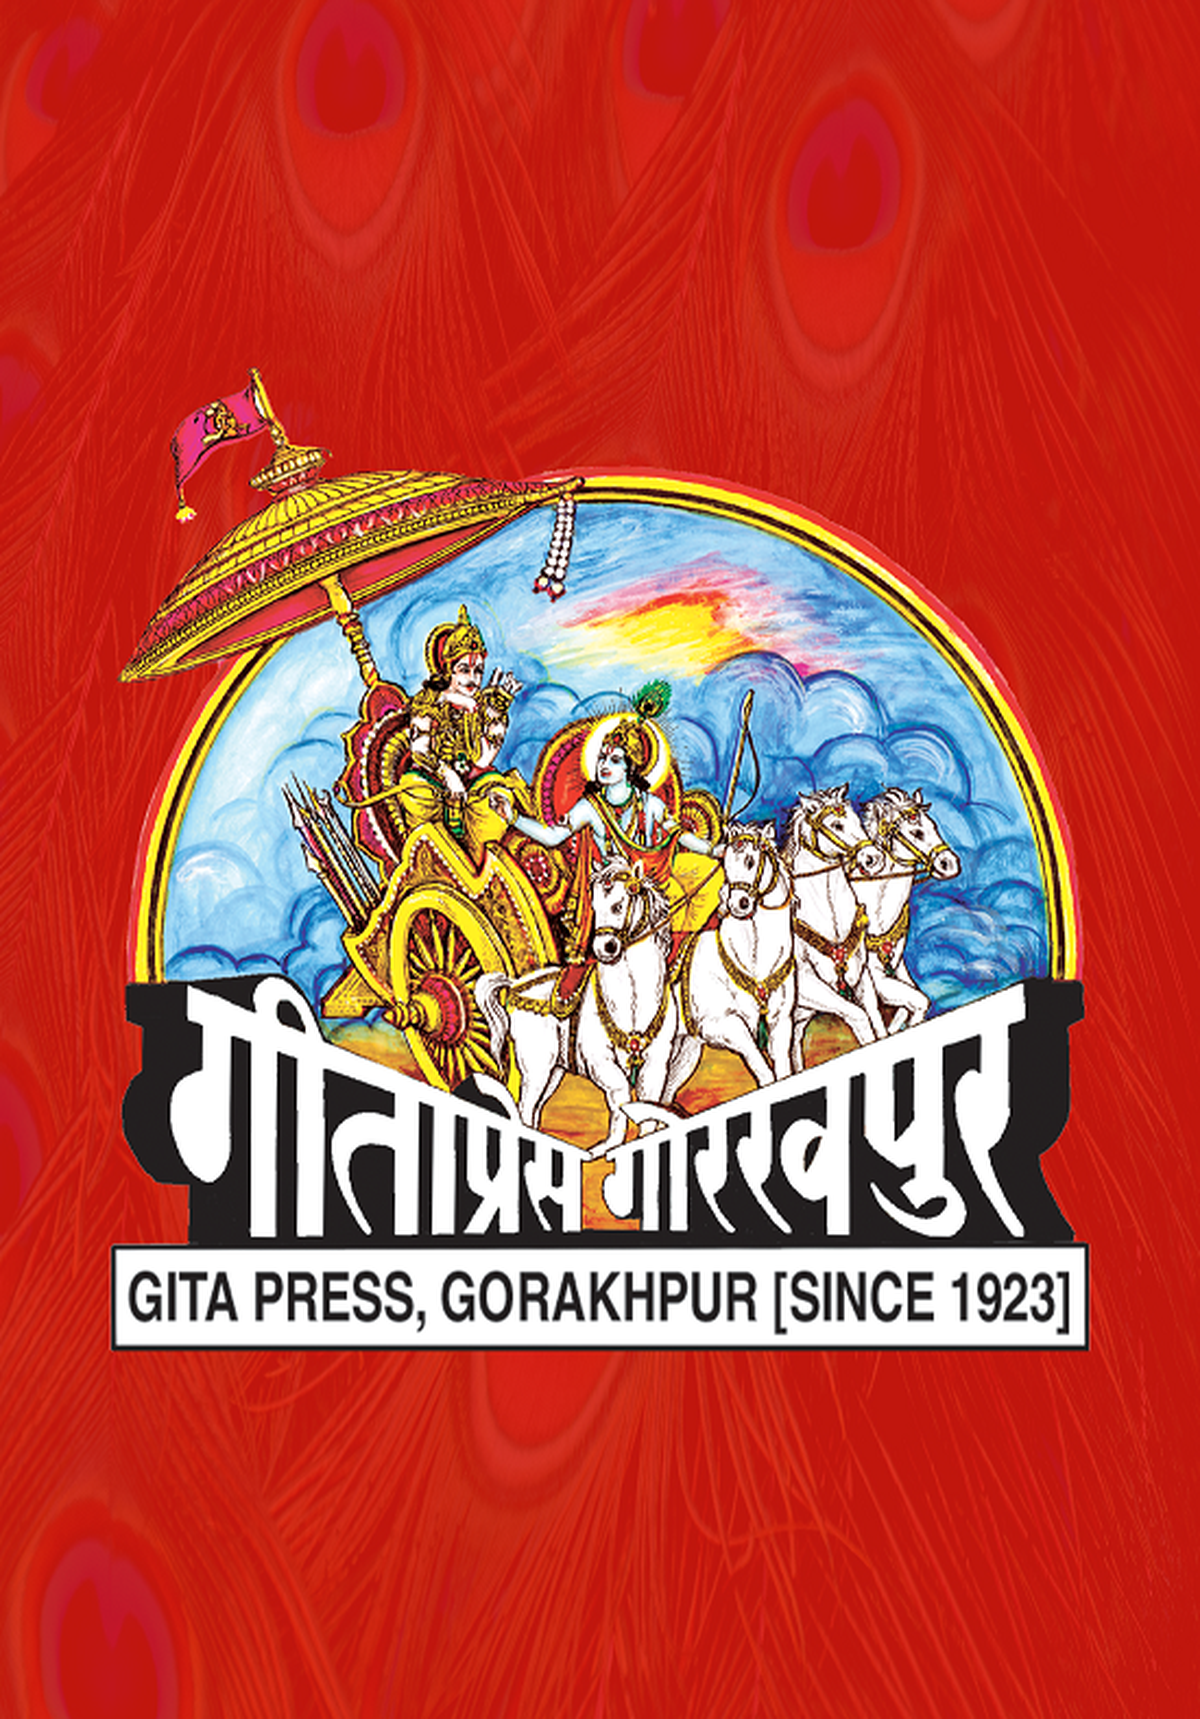 Book cover of the Gita text published by Gita Press, Gorakhpur